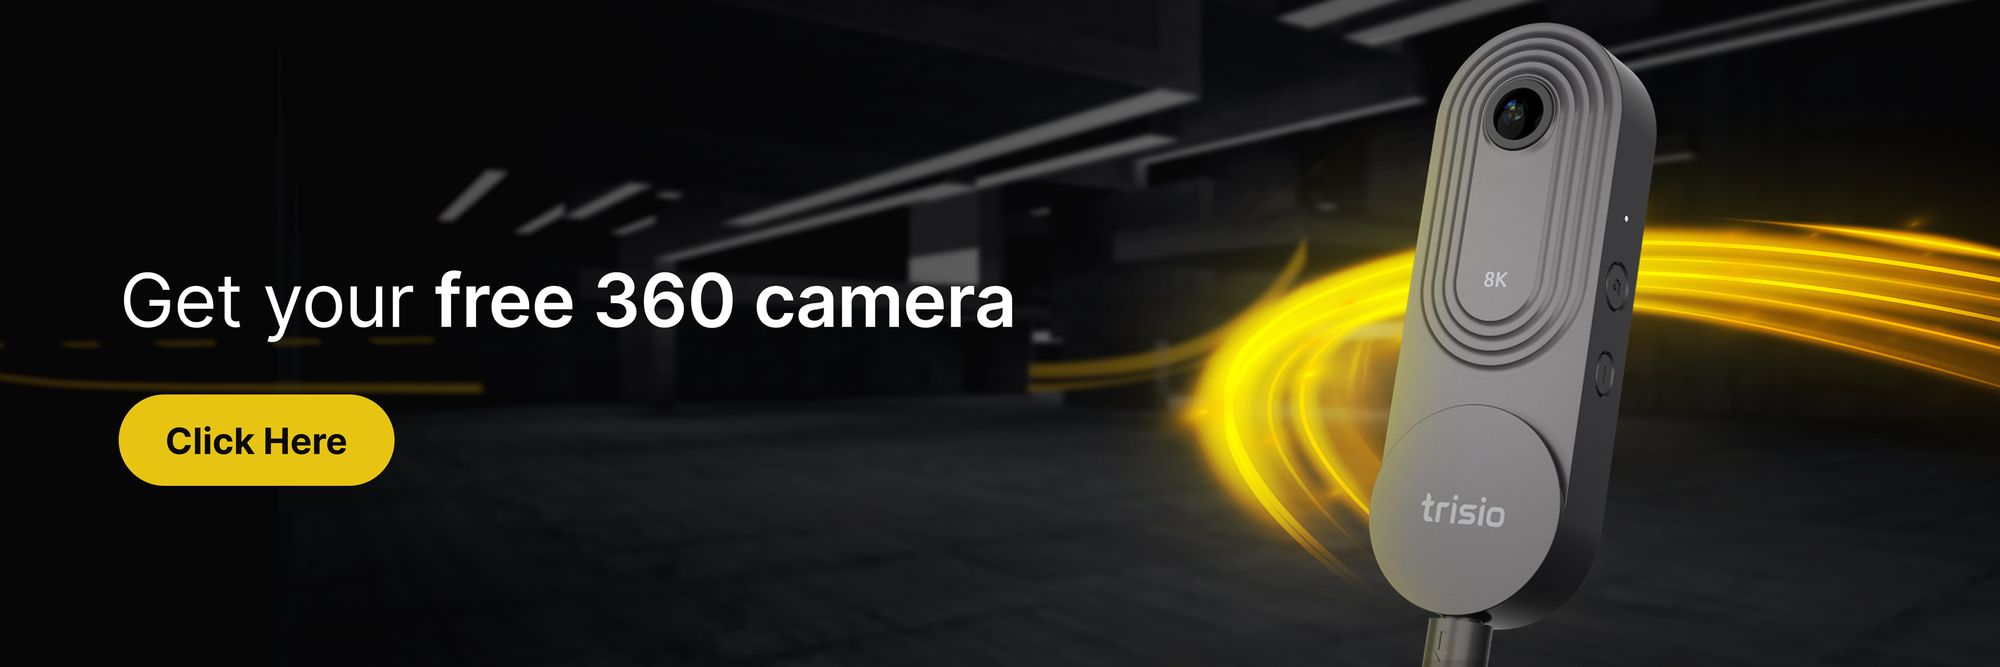 free 360 camera